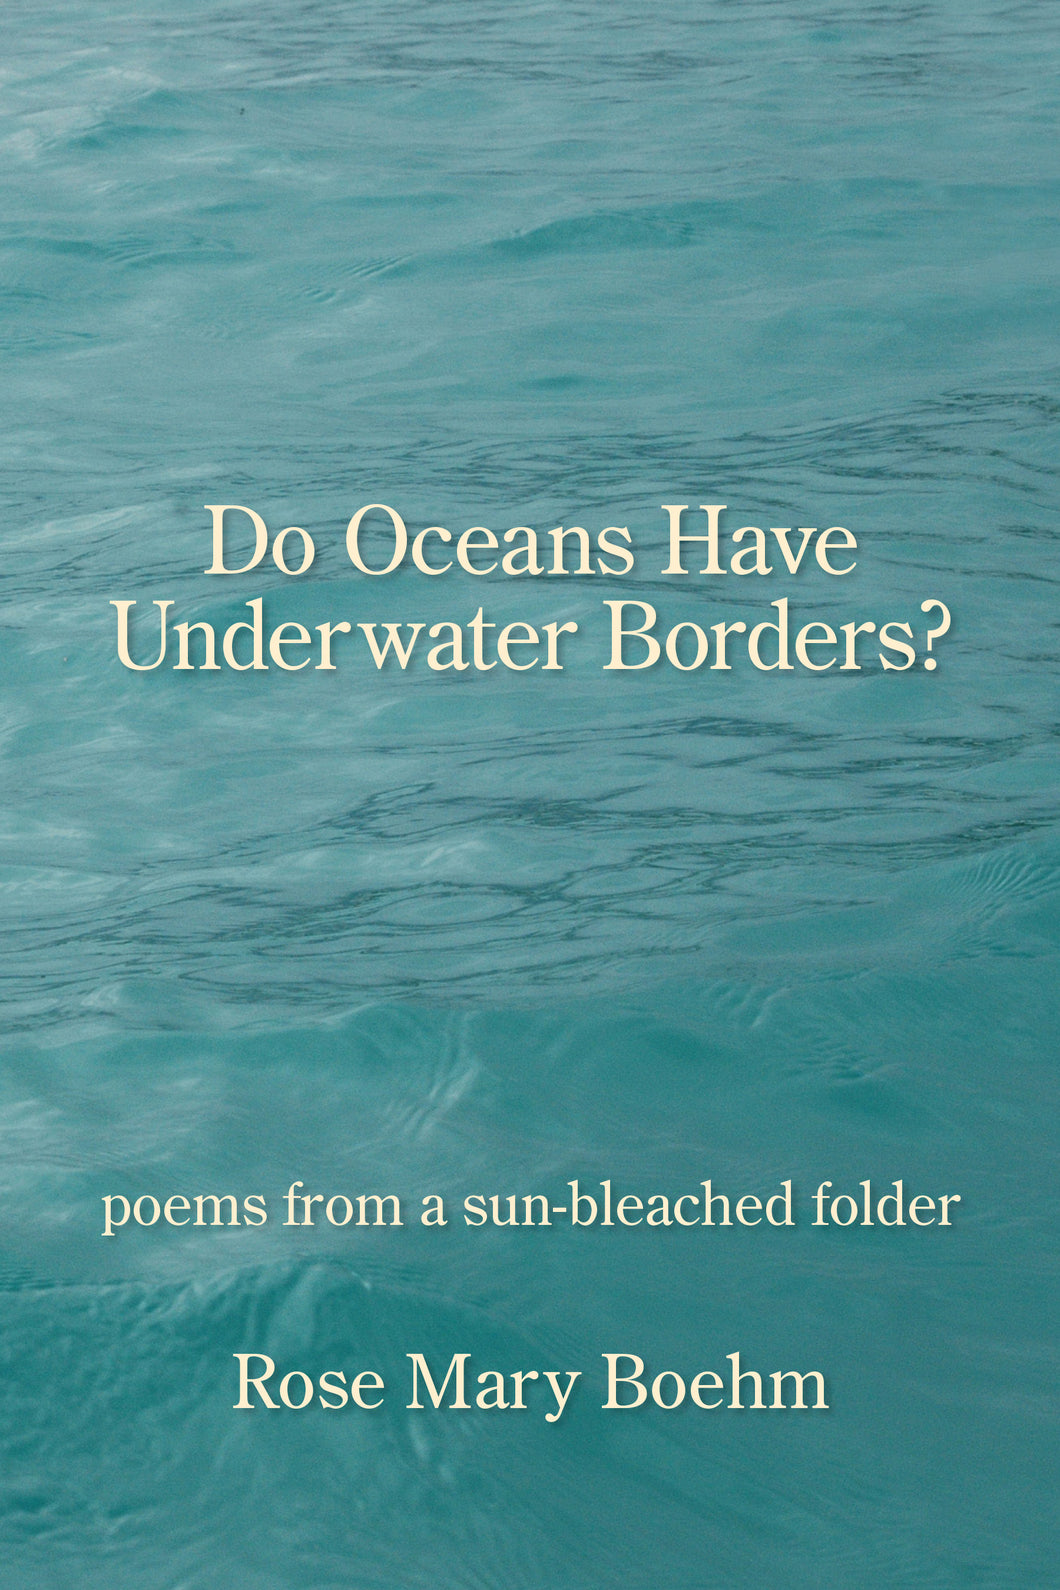 Do Oceans Have Underwater Borders?